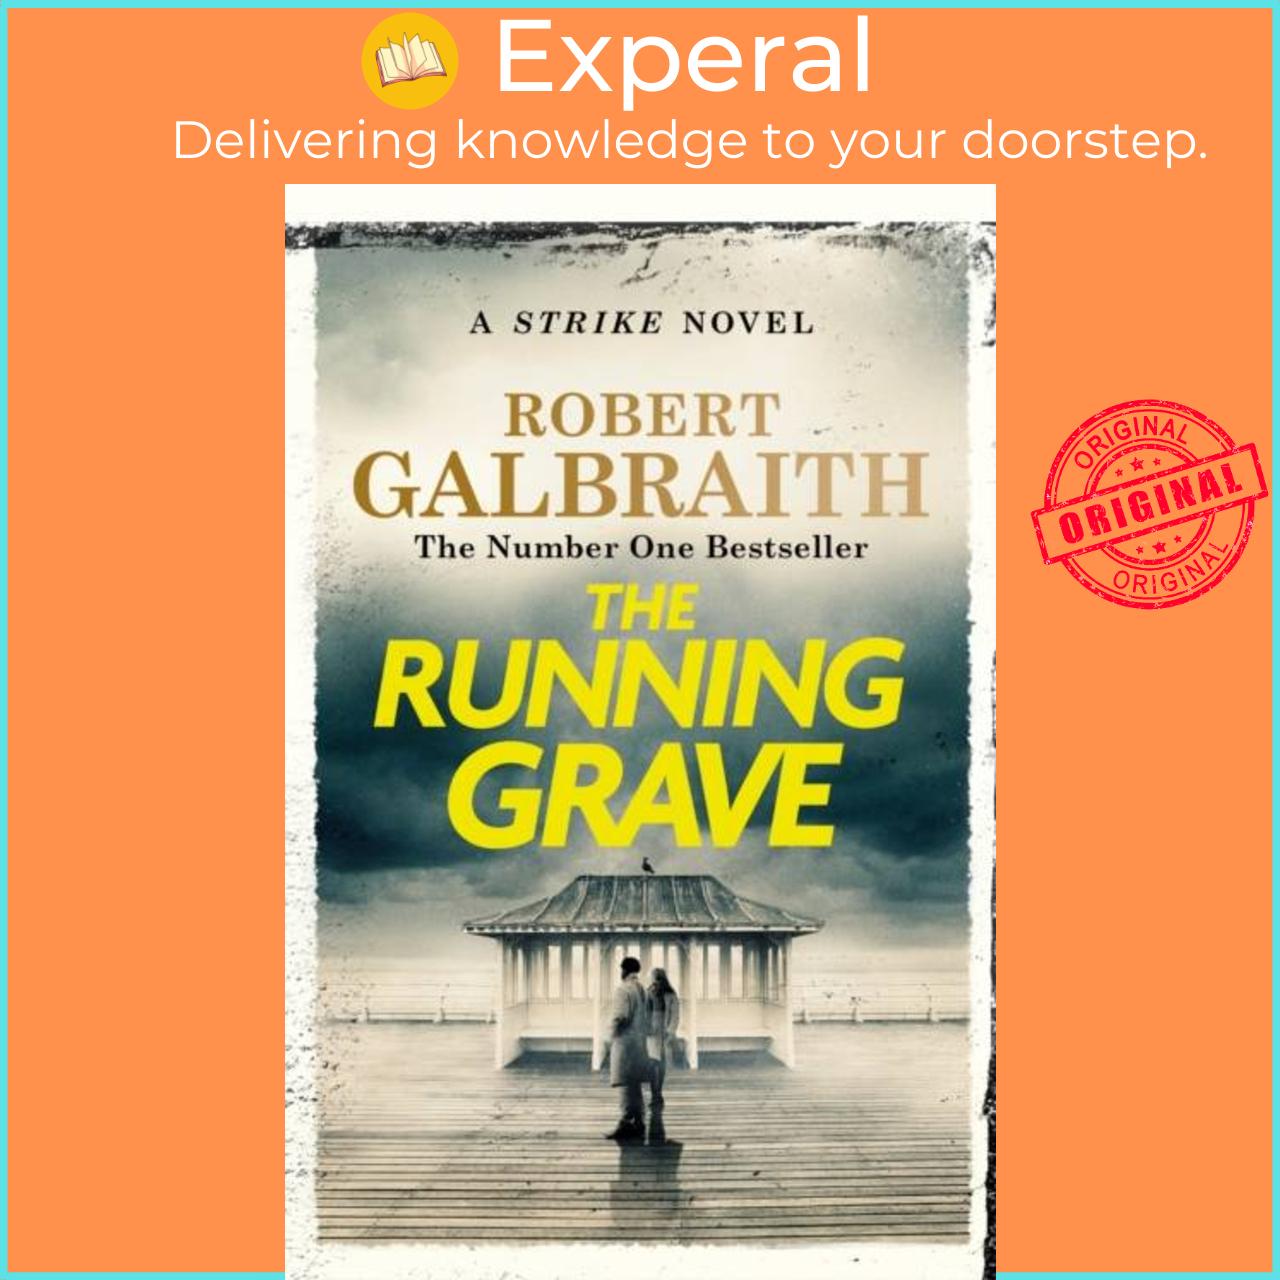 Sách - The Running Grave - Cormoran Strike Book 7 by Robert Galbraith (UK edition, hardcover)